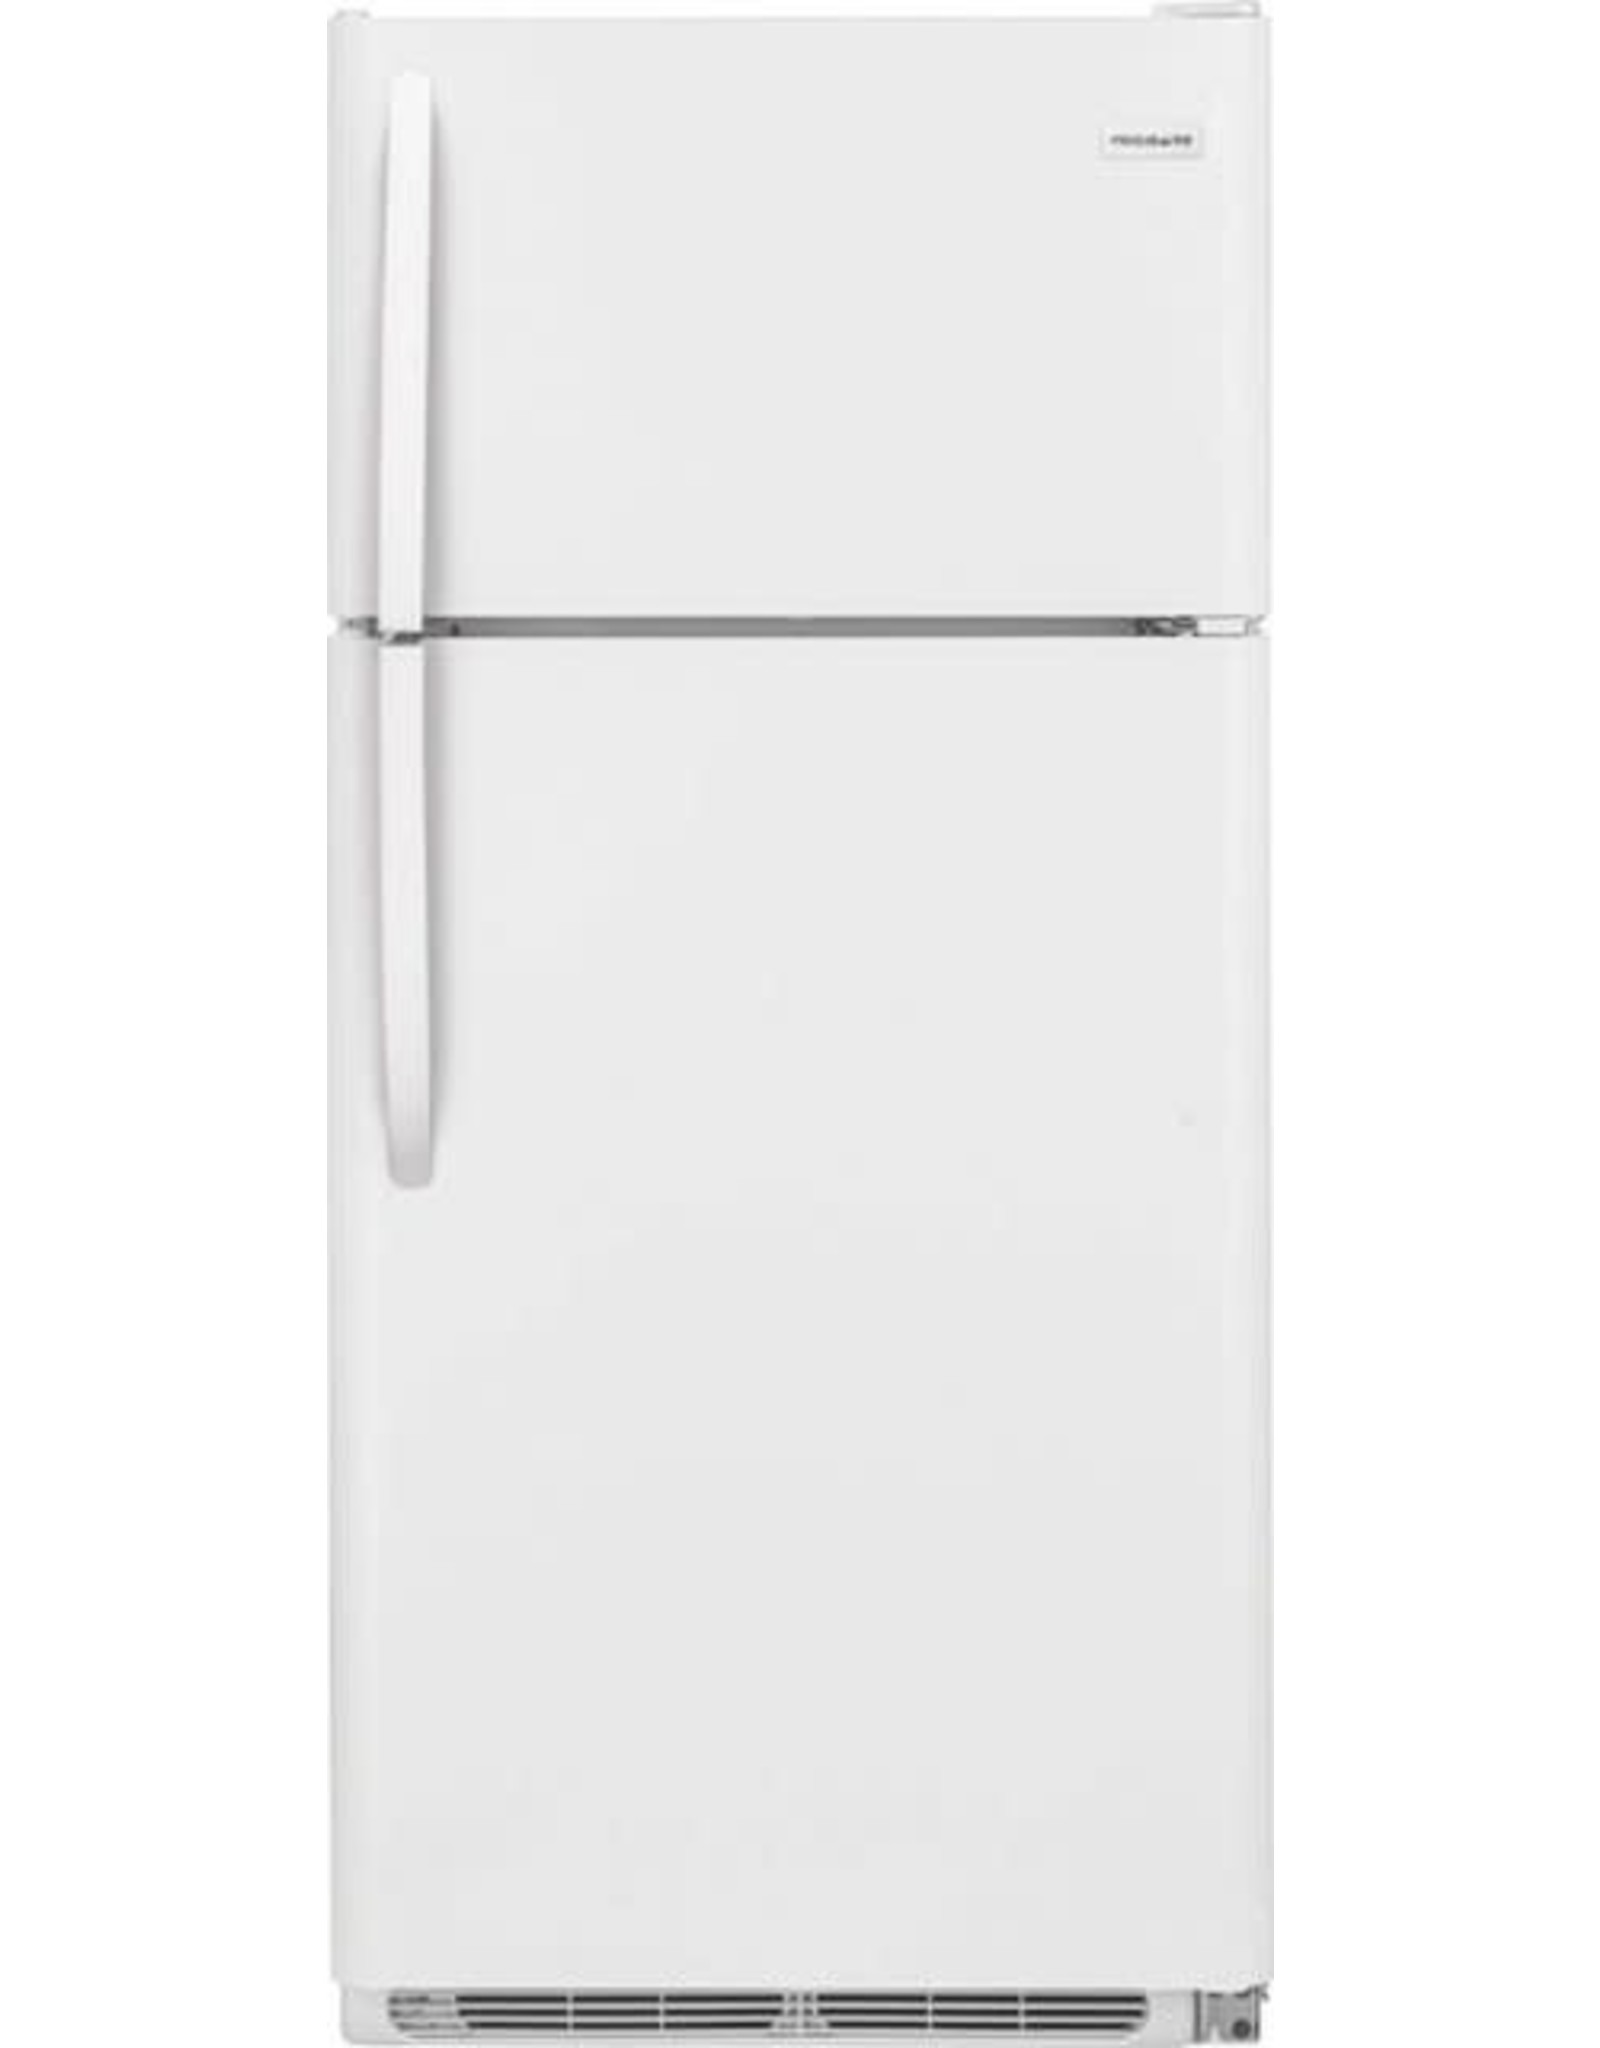 FRIGIDAIRE FFTR1814TW 18 cu. ft. 001641 Top Freezer Refrigerator in White